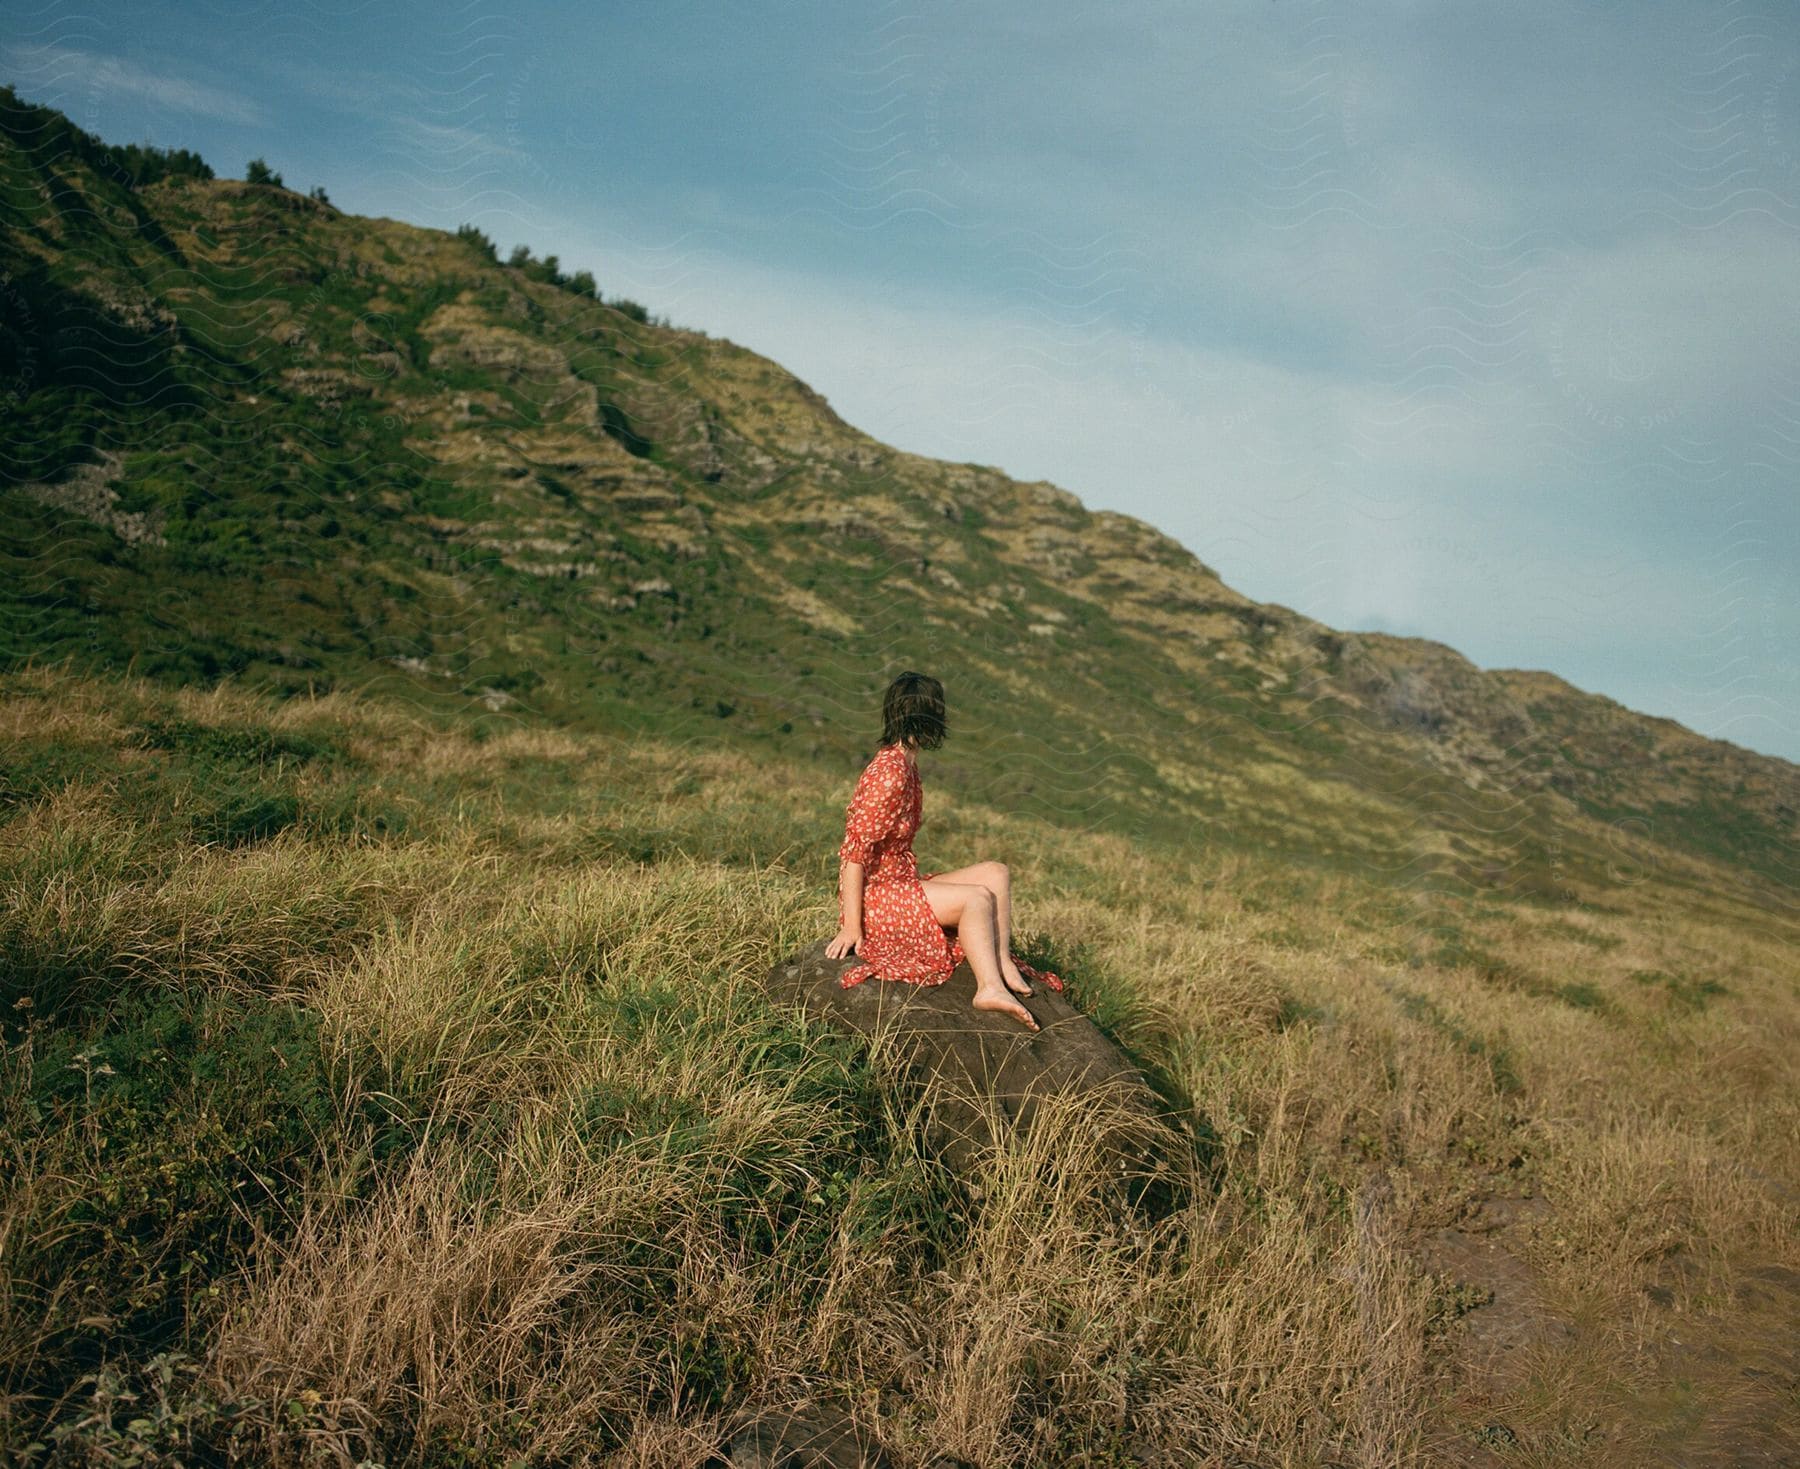 A barefoot woman in an orange dress sits on a rock in the grasslands below a mountain ridge.